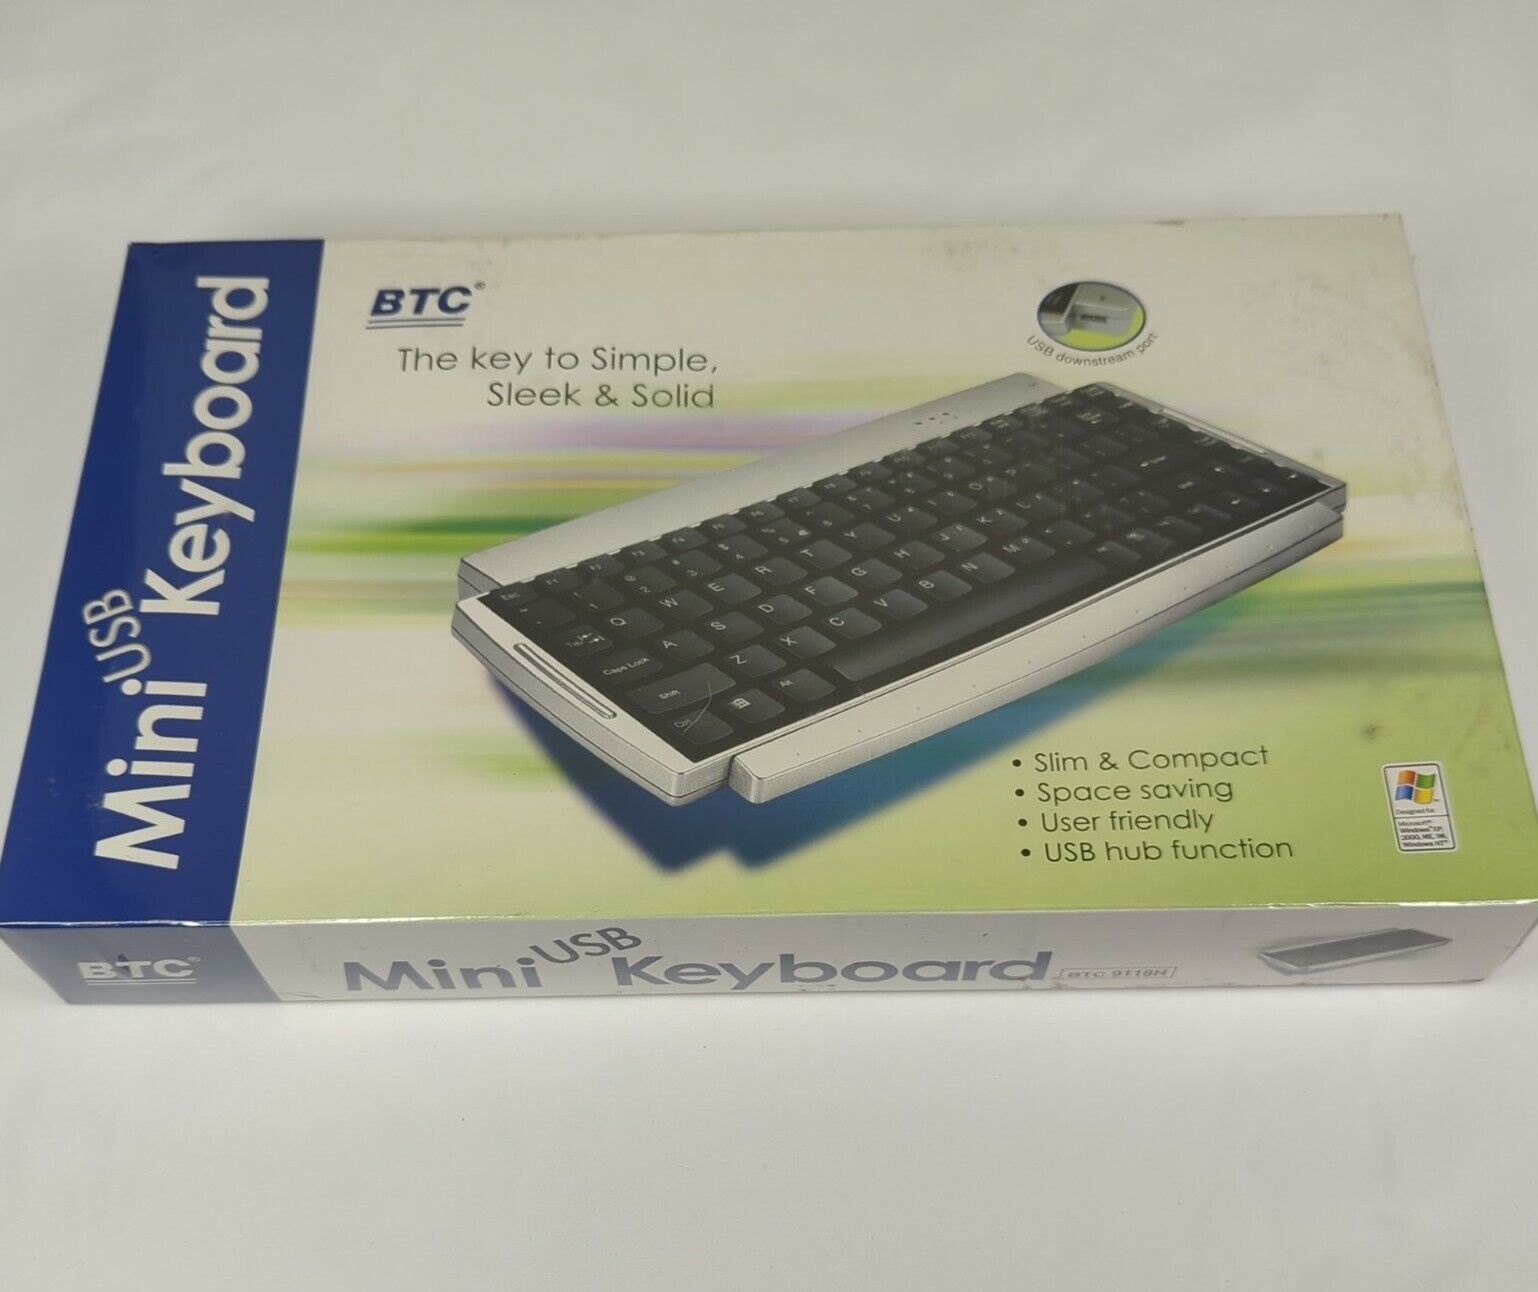 BTC Mini USB Keyboard - BTC 9118H w/ USB Downstream Port - New & Sealed